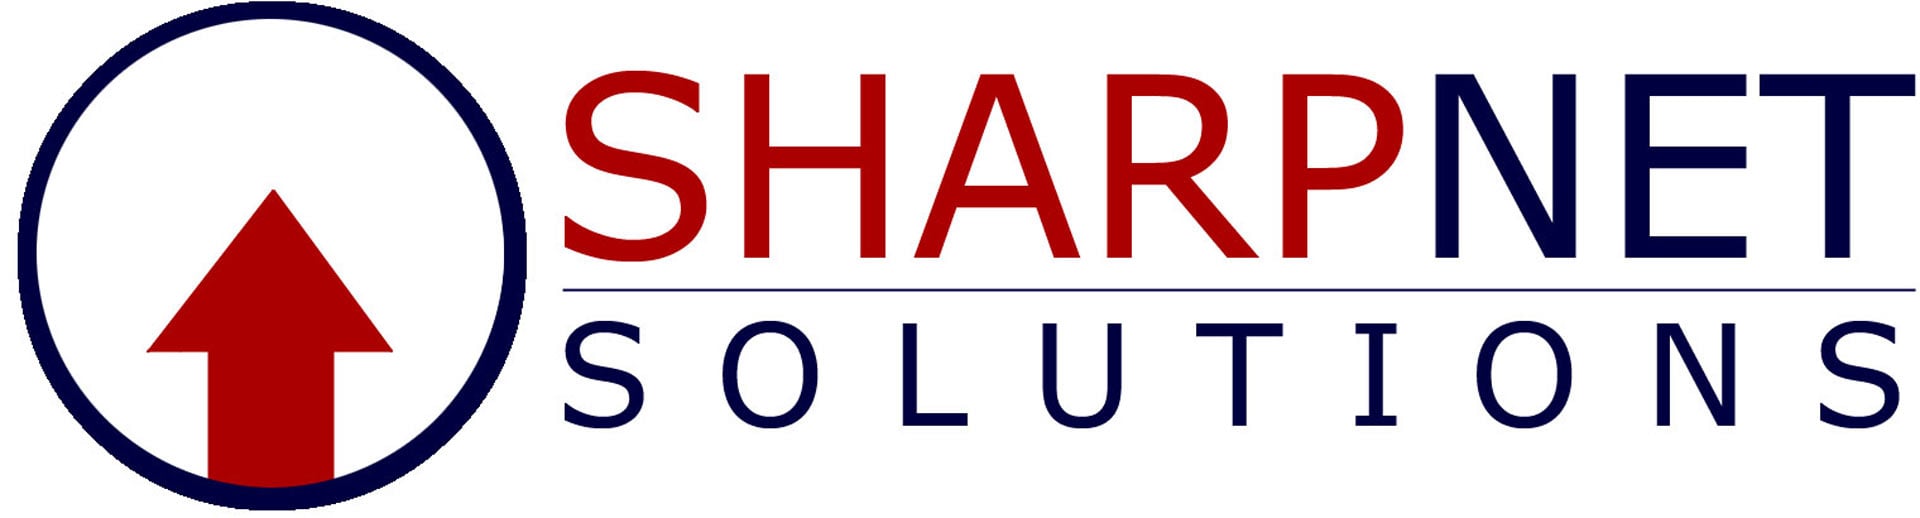 Top Real Estate SEO Company Logo: SharpNet